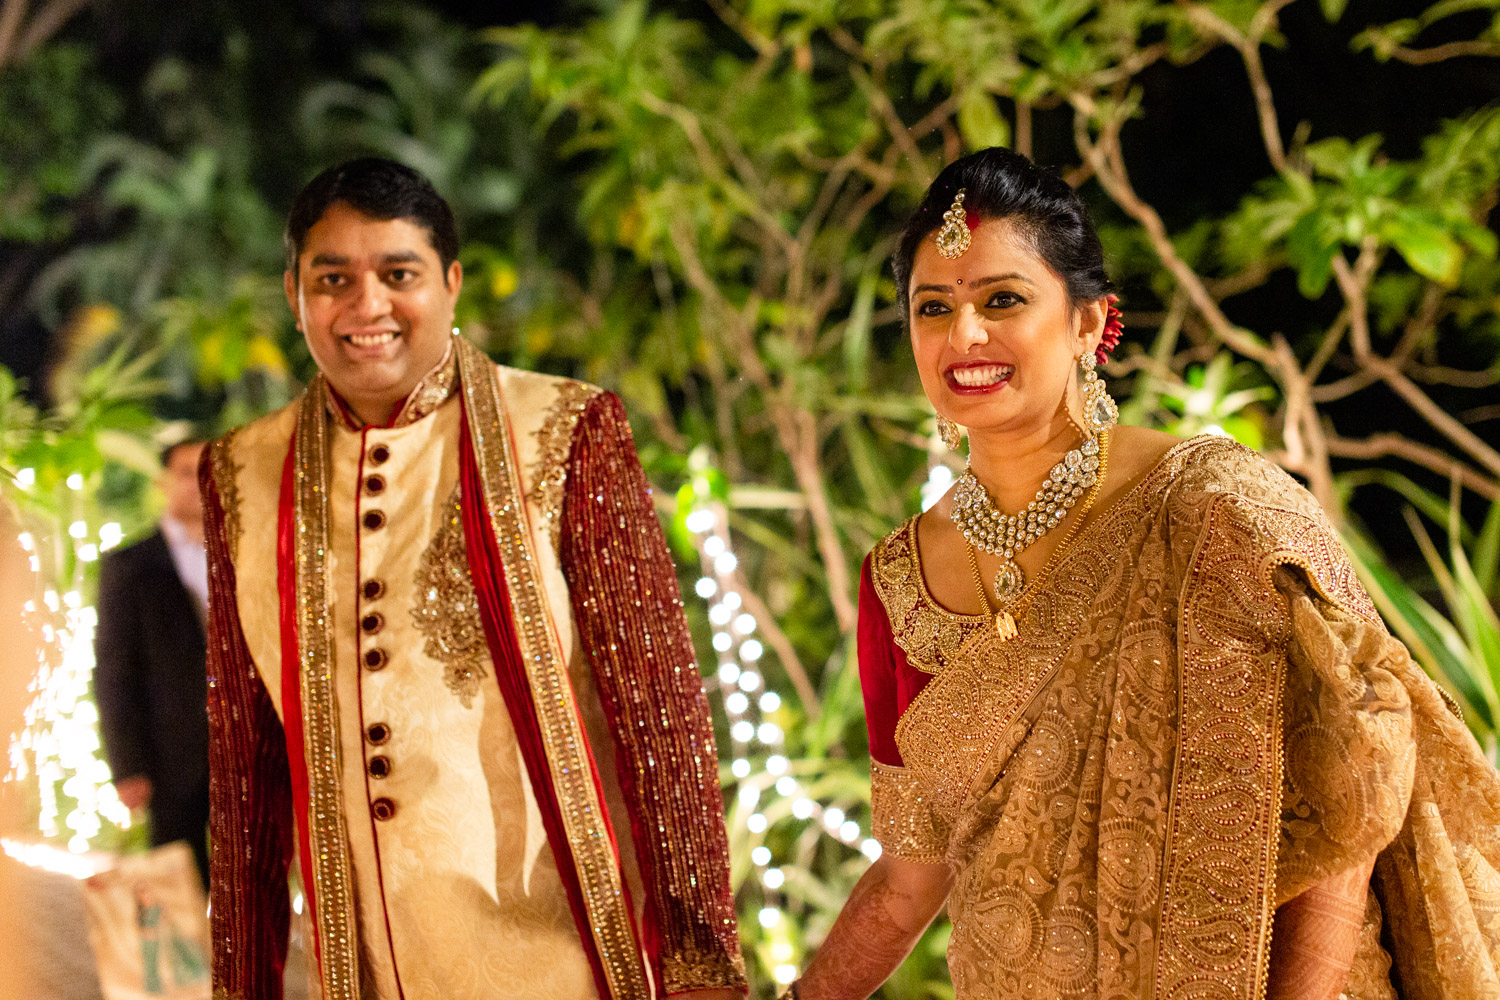 Outdoor Arya Samaj wedding at bangalore dropdstudio weddings